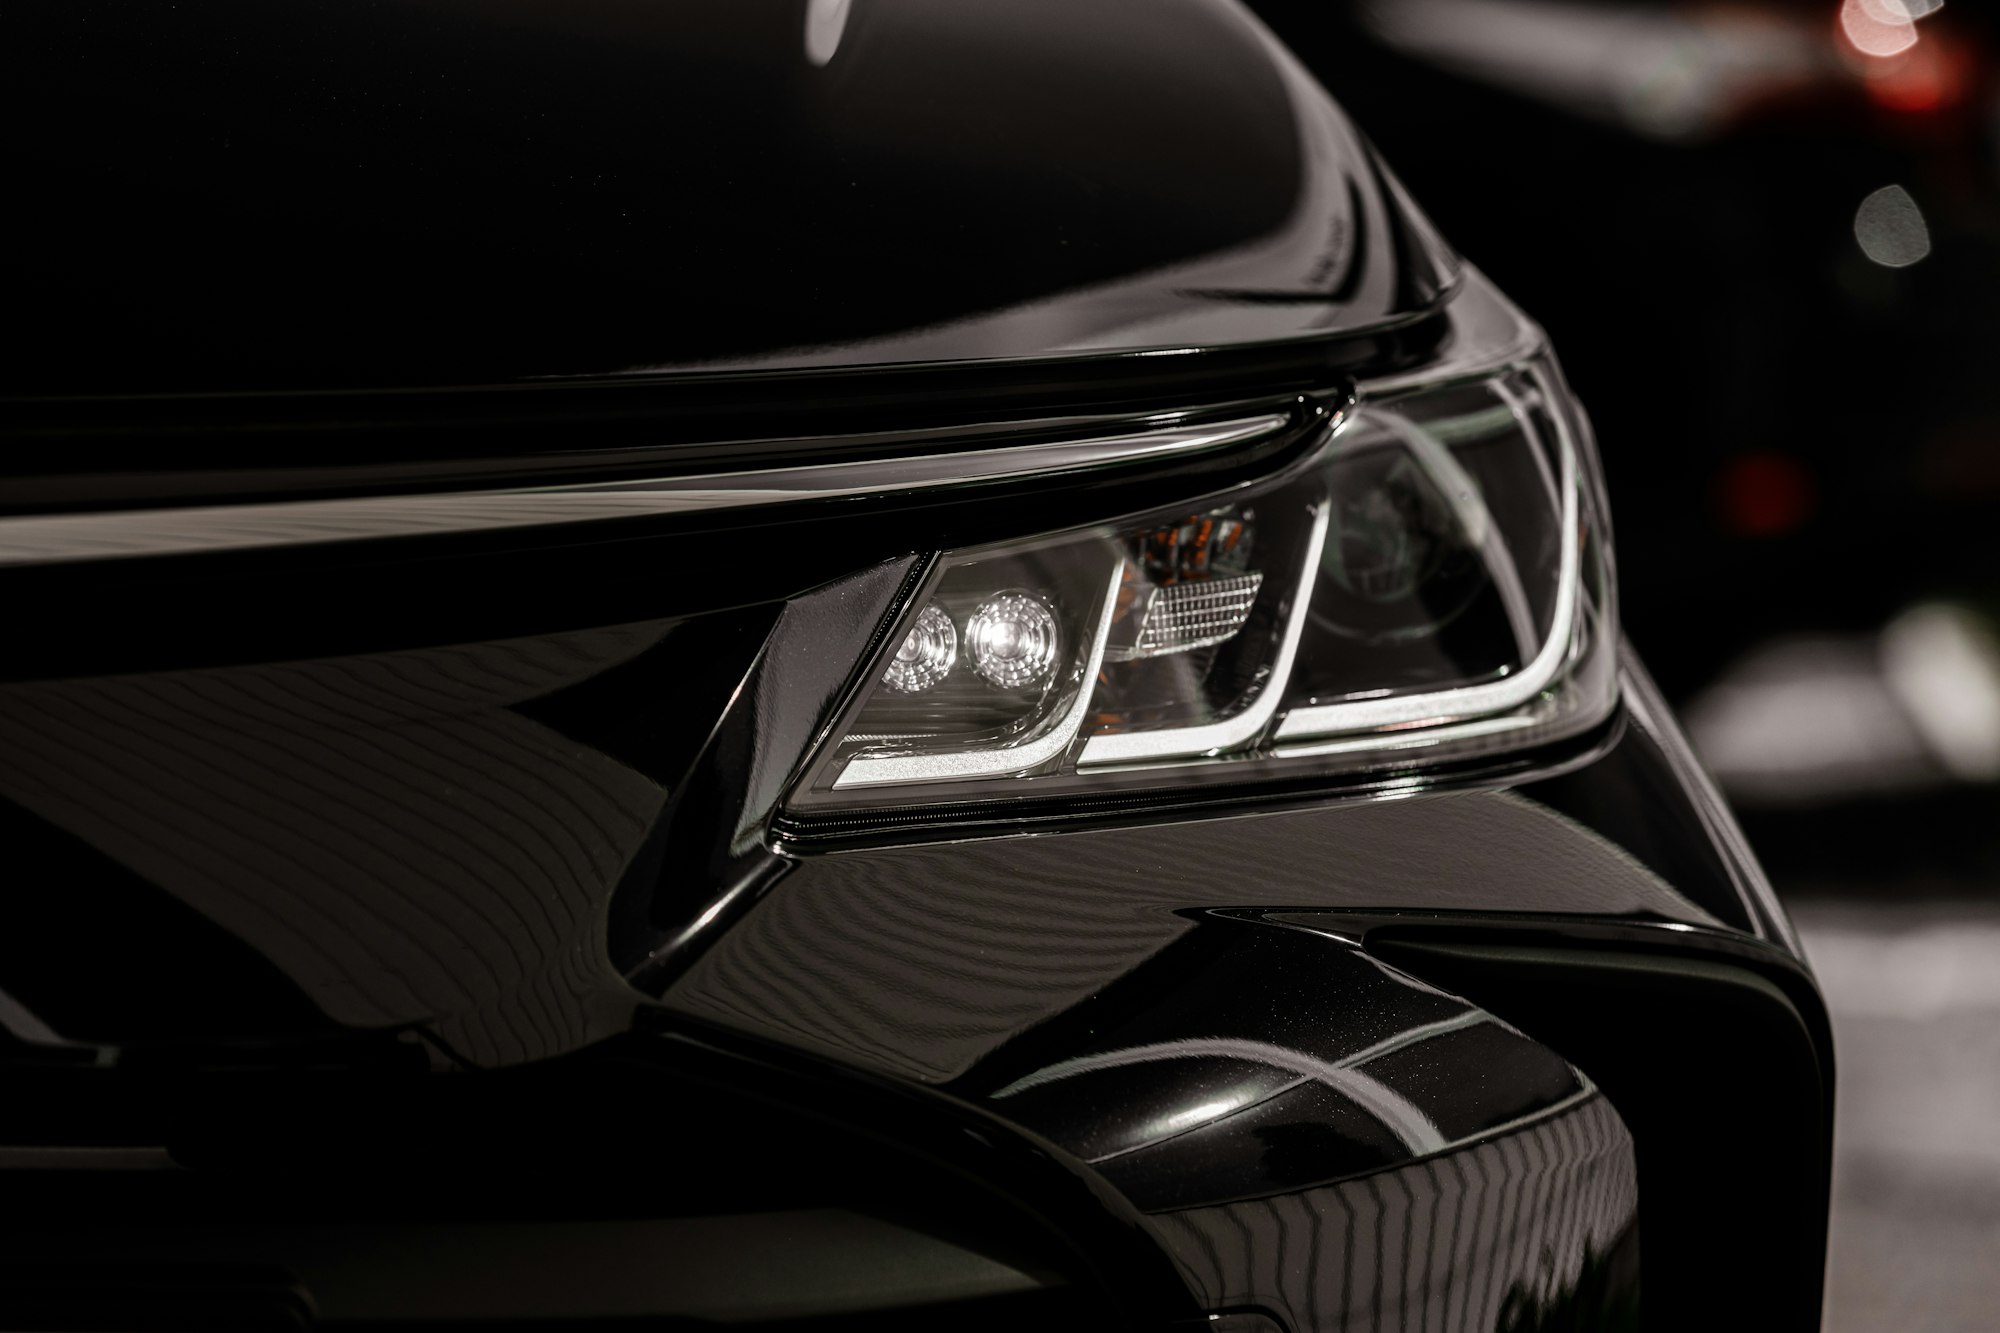 headlight of modern prestigious black car close up.Close up photo of modern car, detail of headlight